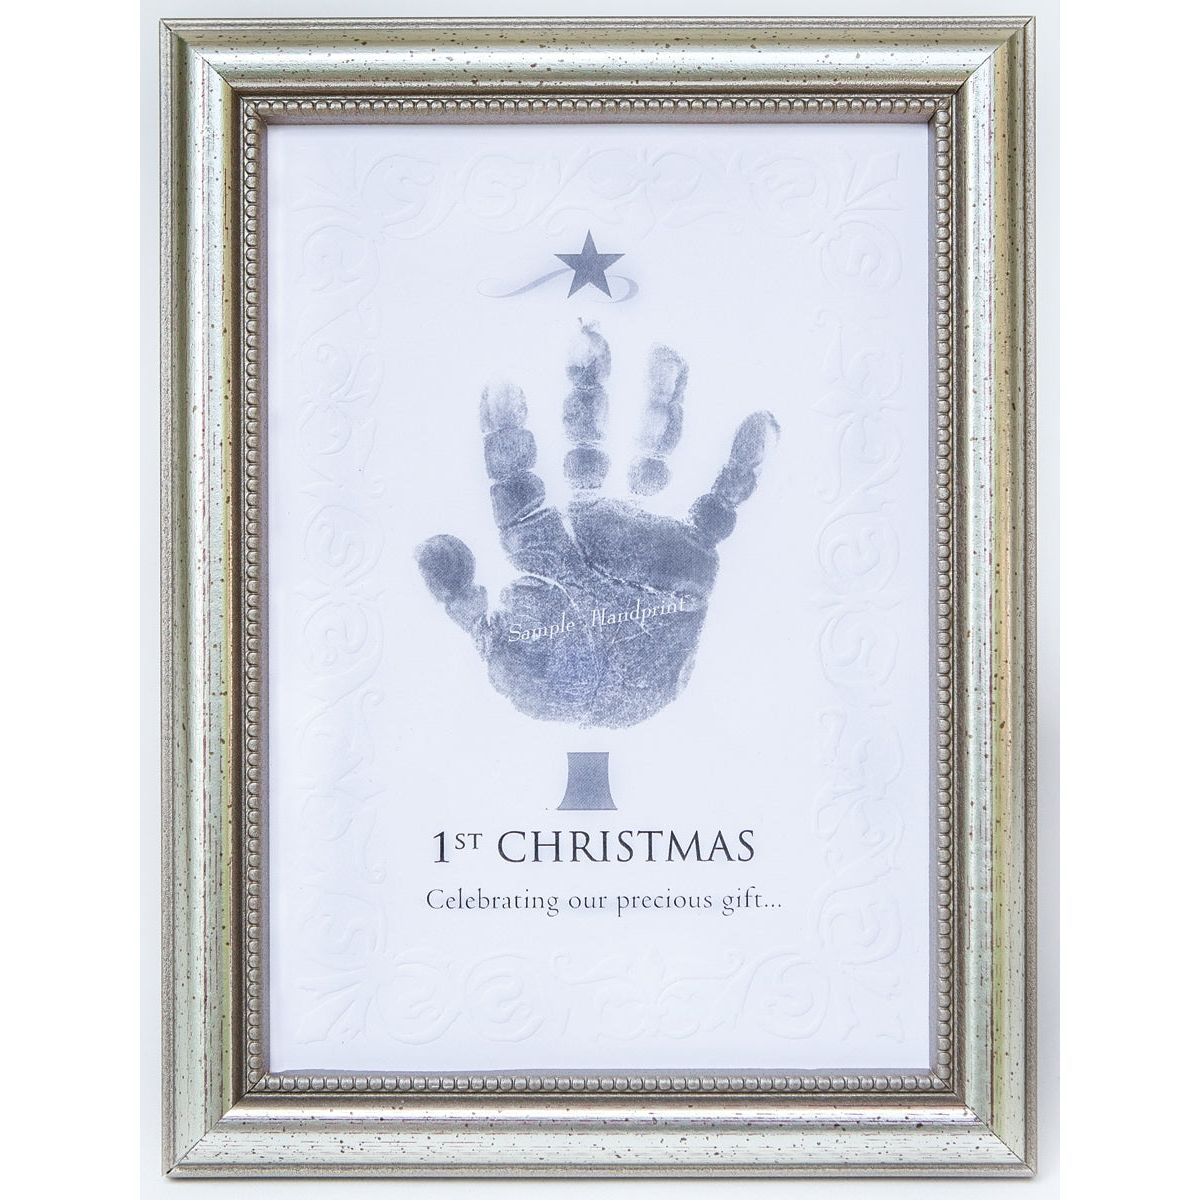 1st Christmas handprint keepsake in elegant frame in silver with embossed beaded design.